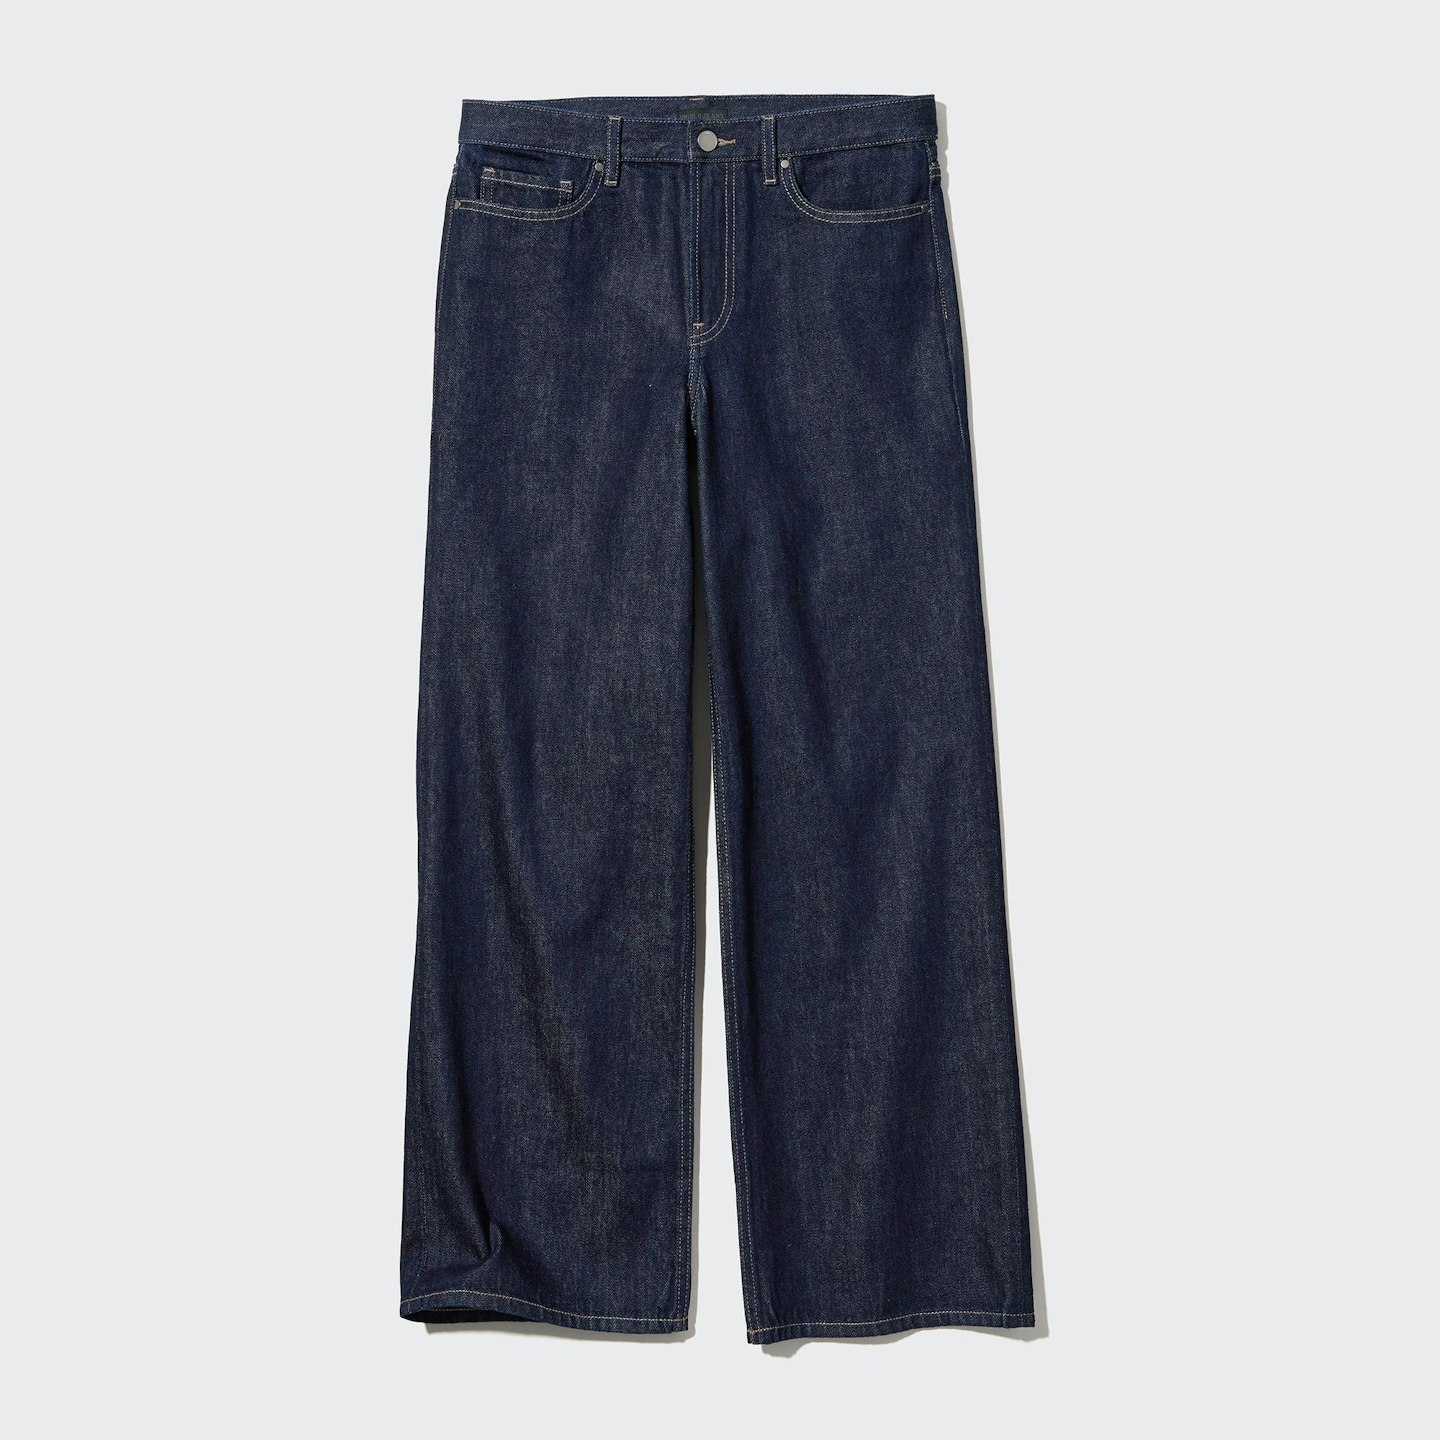 Uniqlo, Low Rise Baggy Fit Jeans